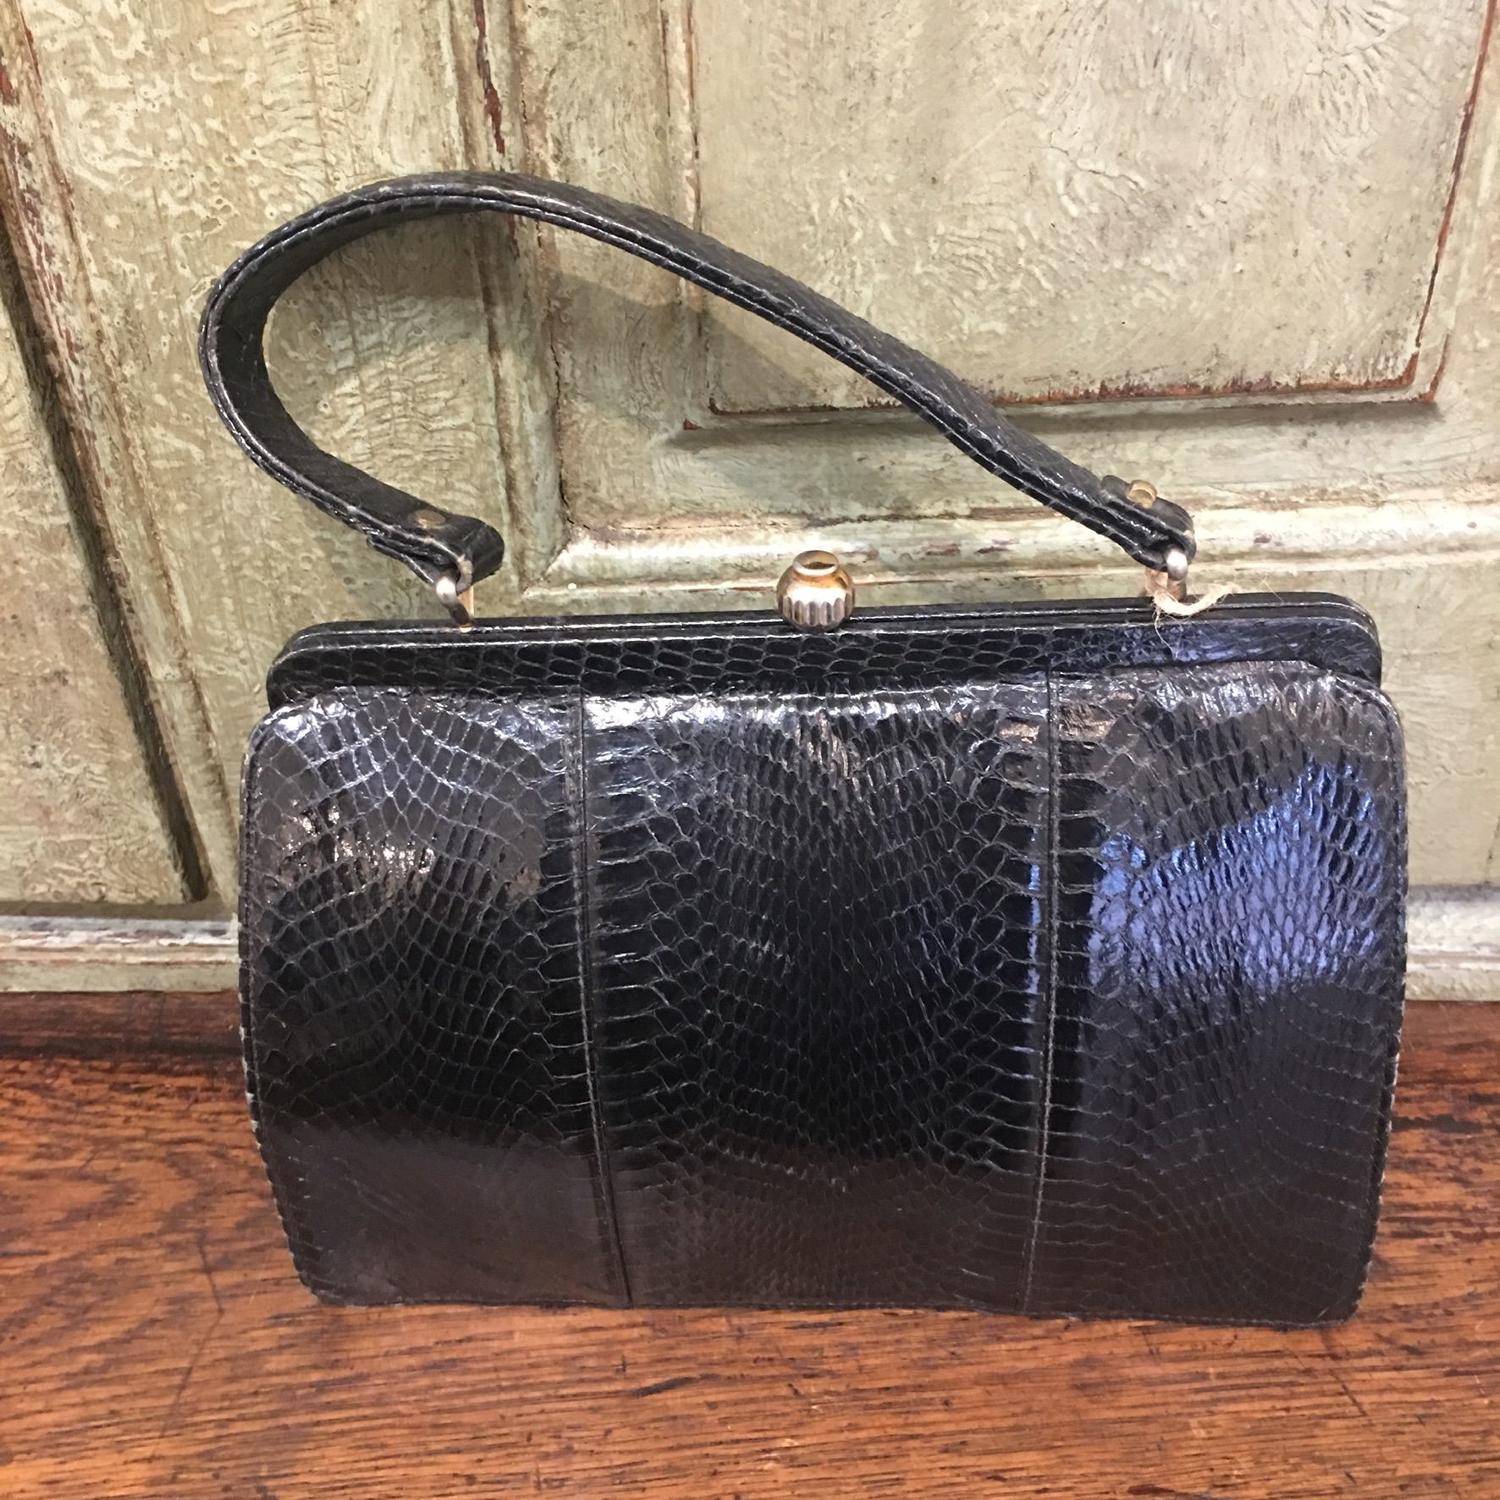 Vintage black lizard skin handbag